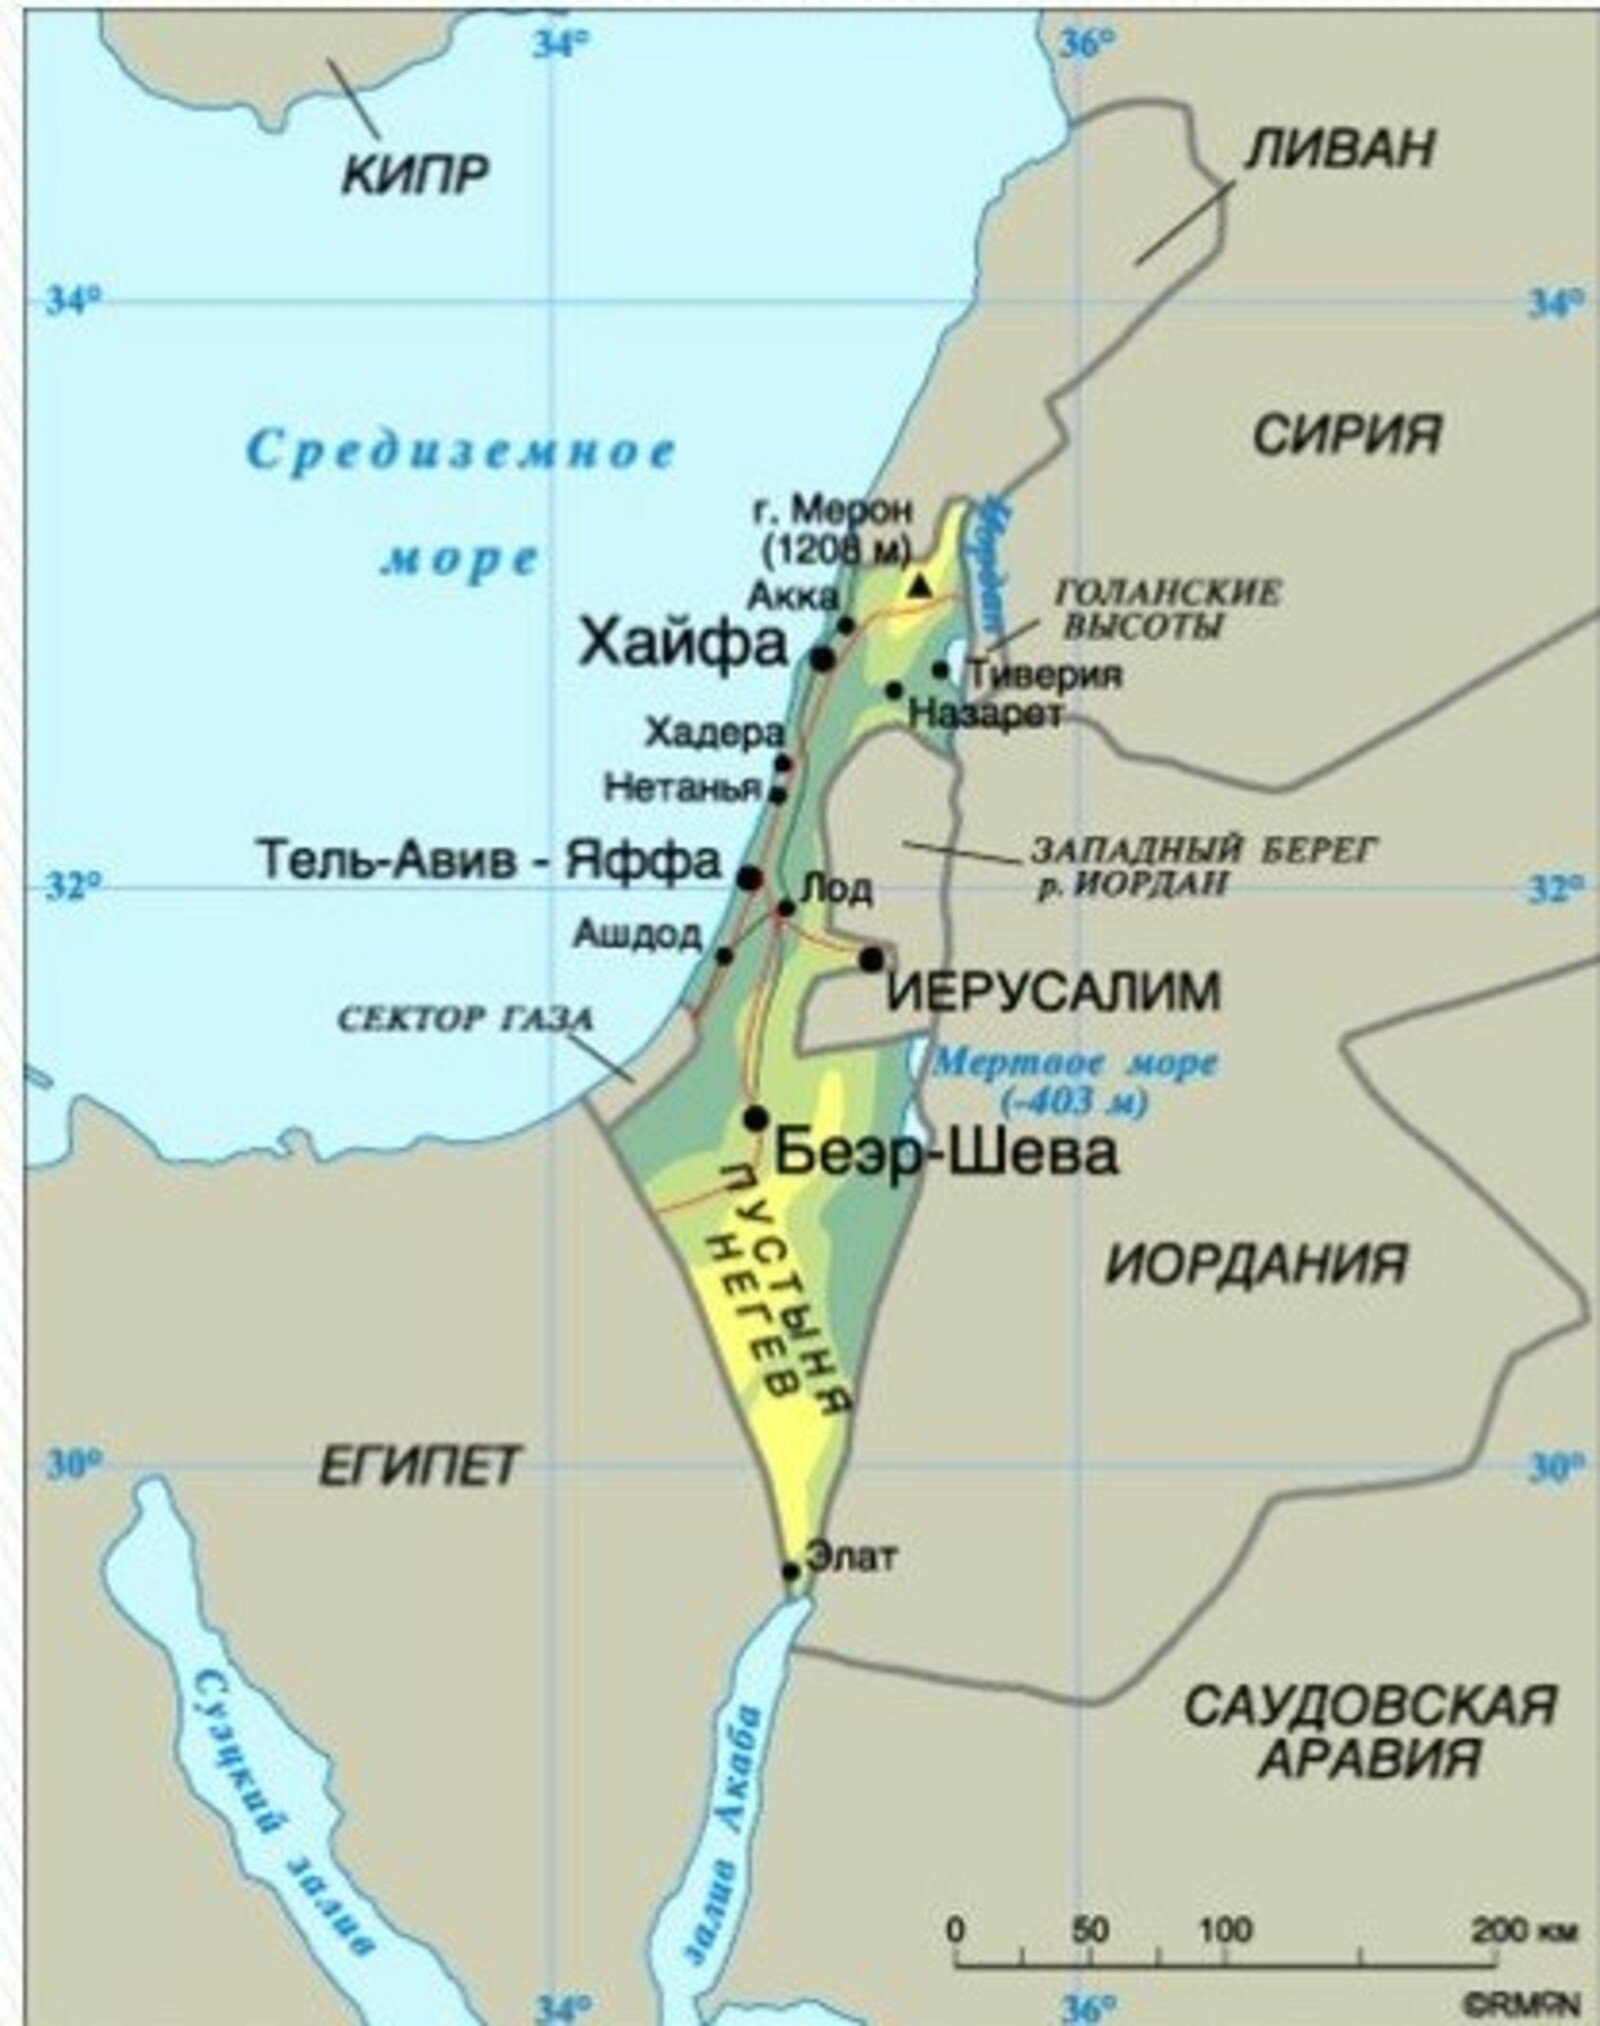 Территория Израиля